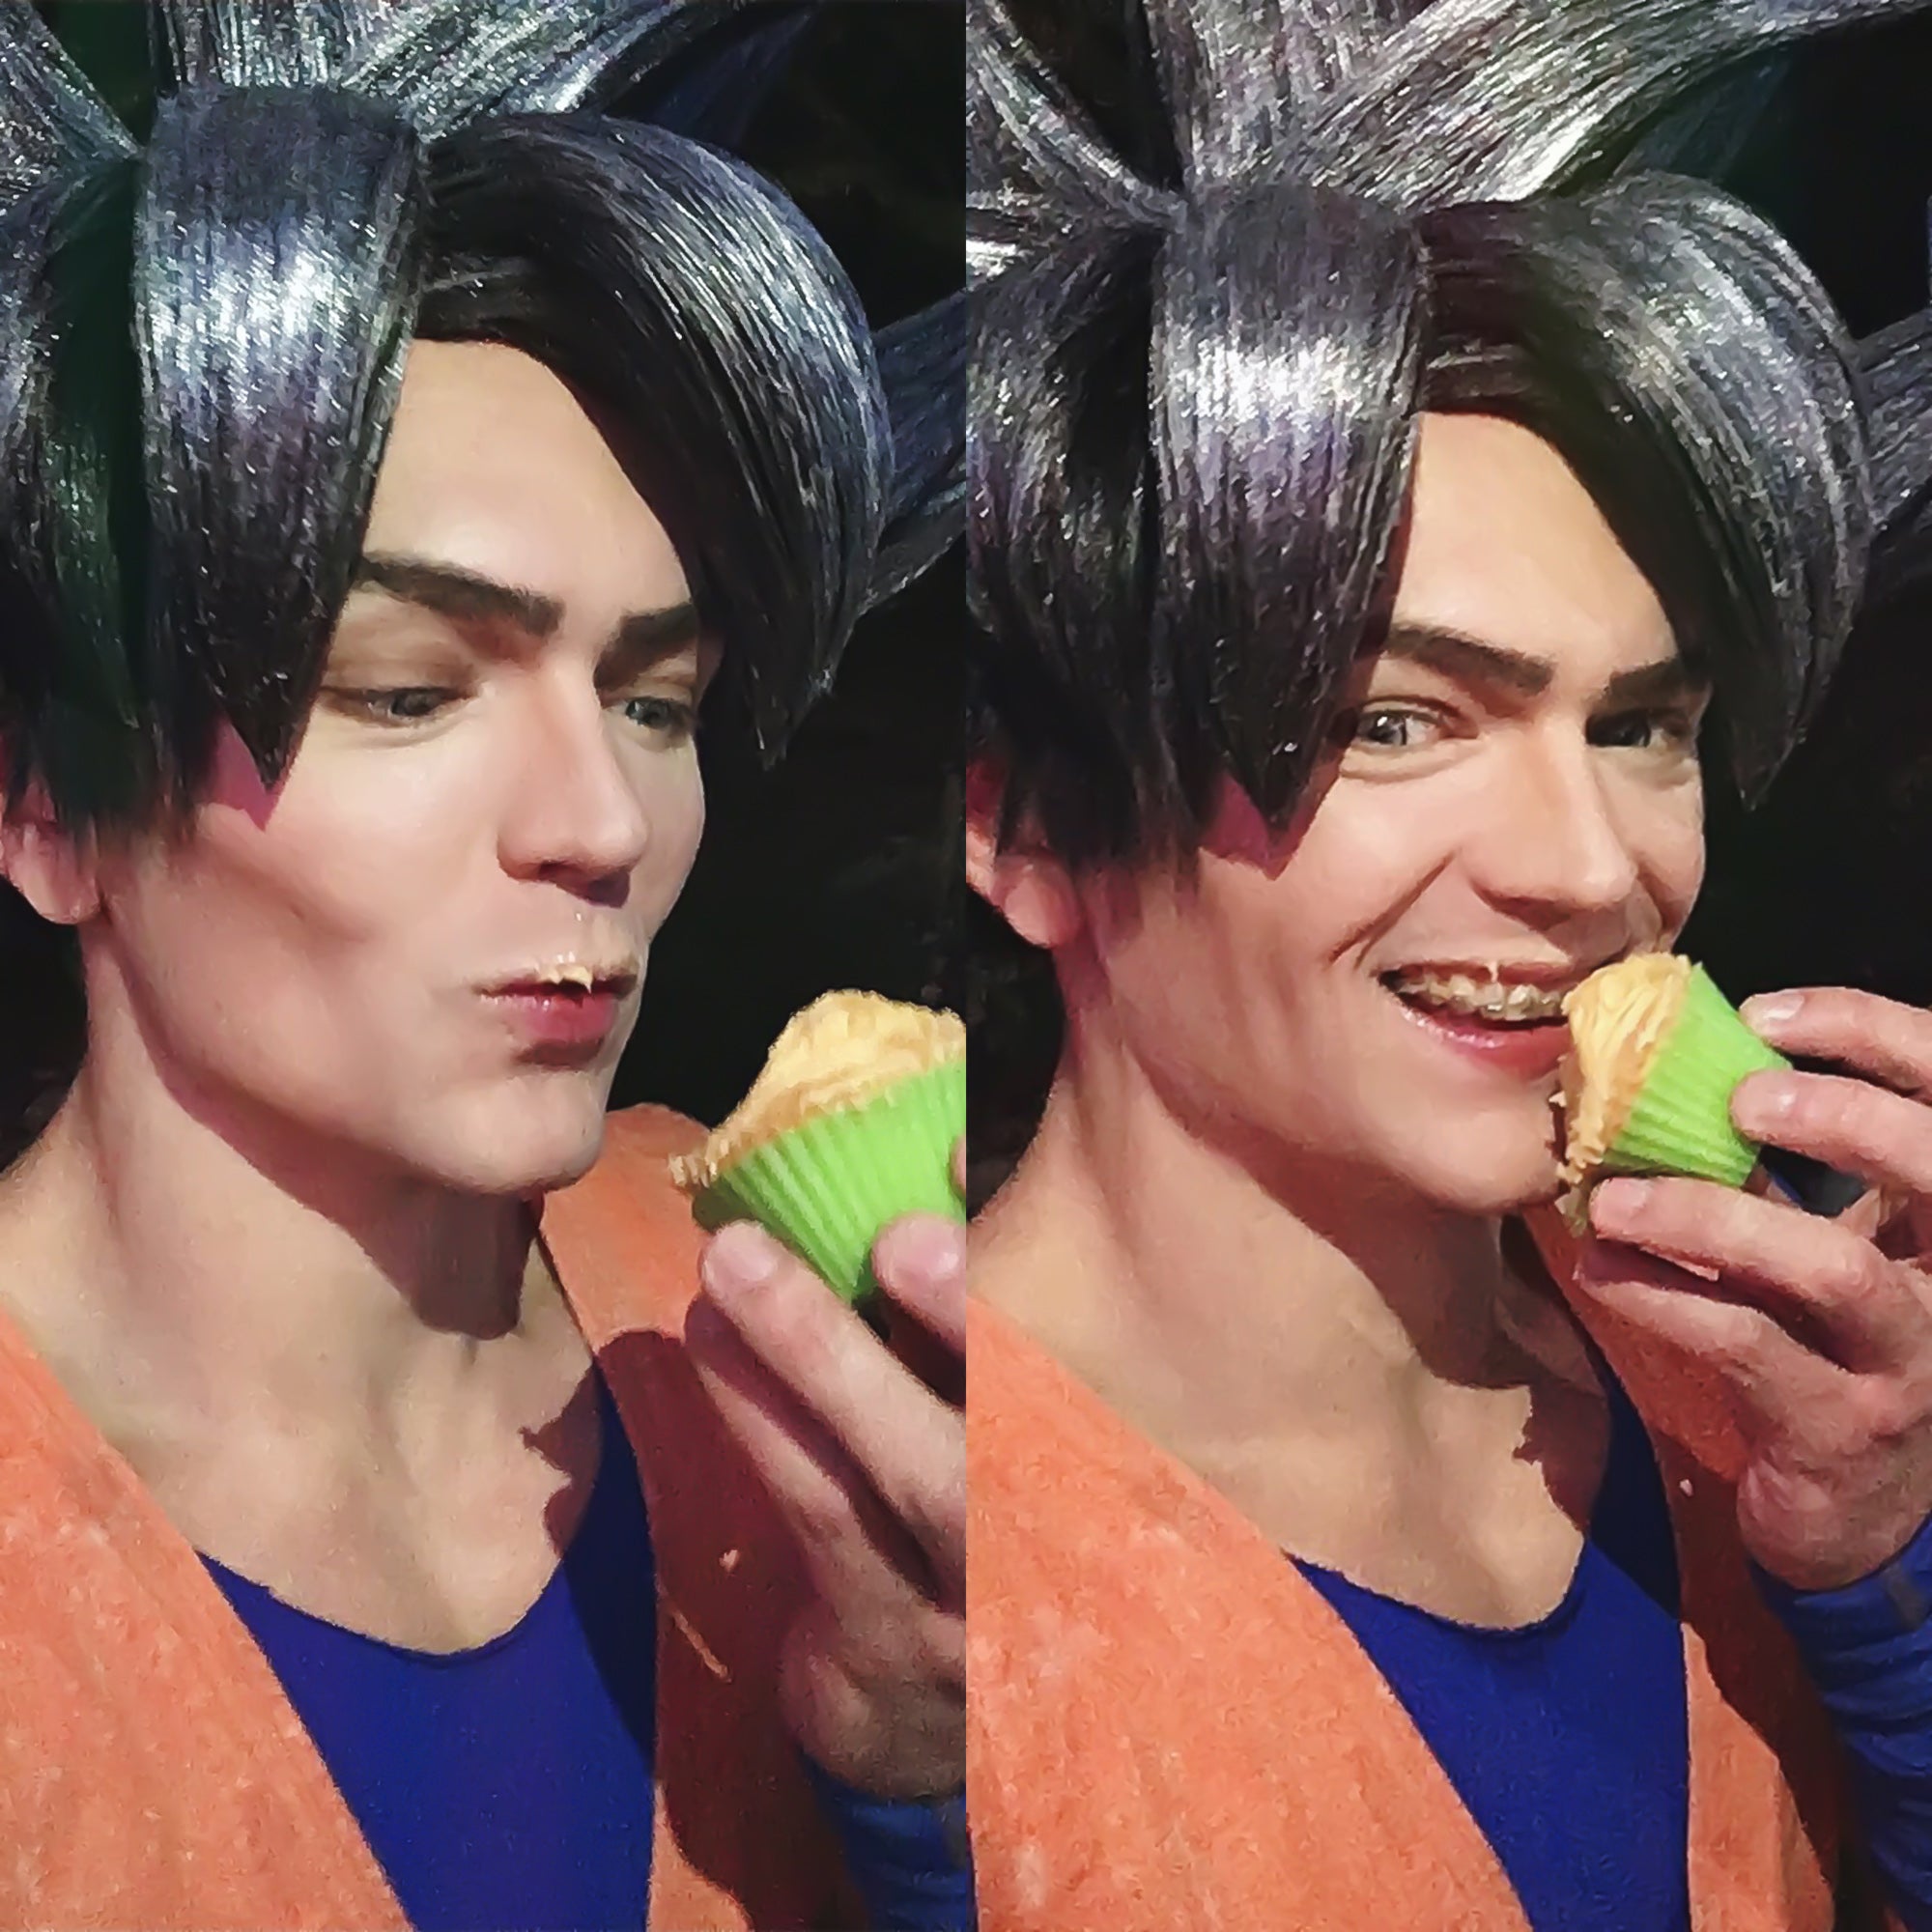 Cosplay: Goku eating cake and smiling